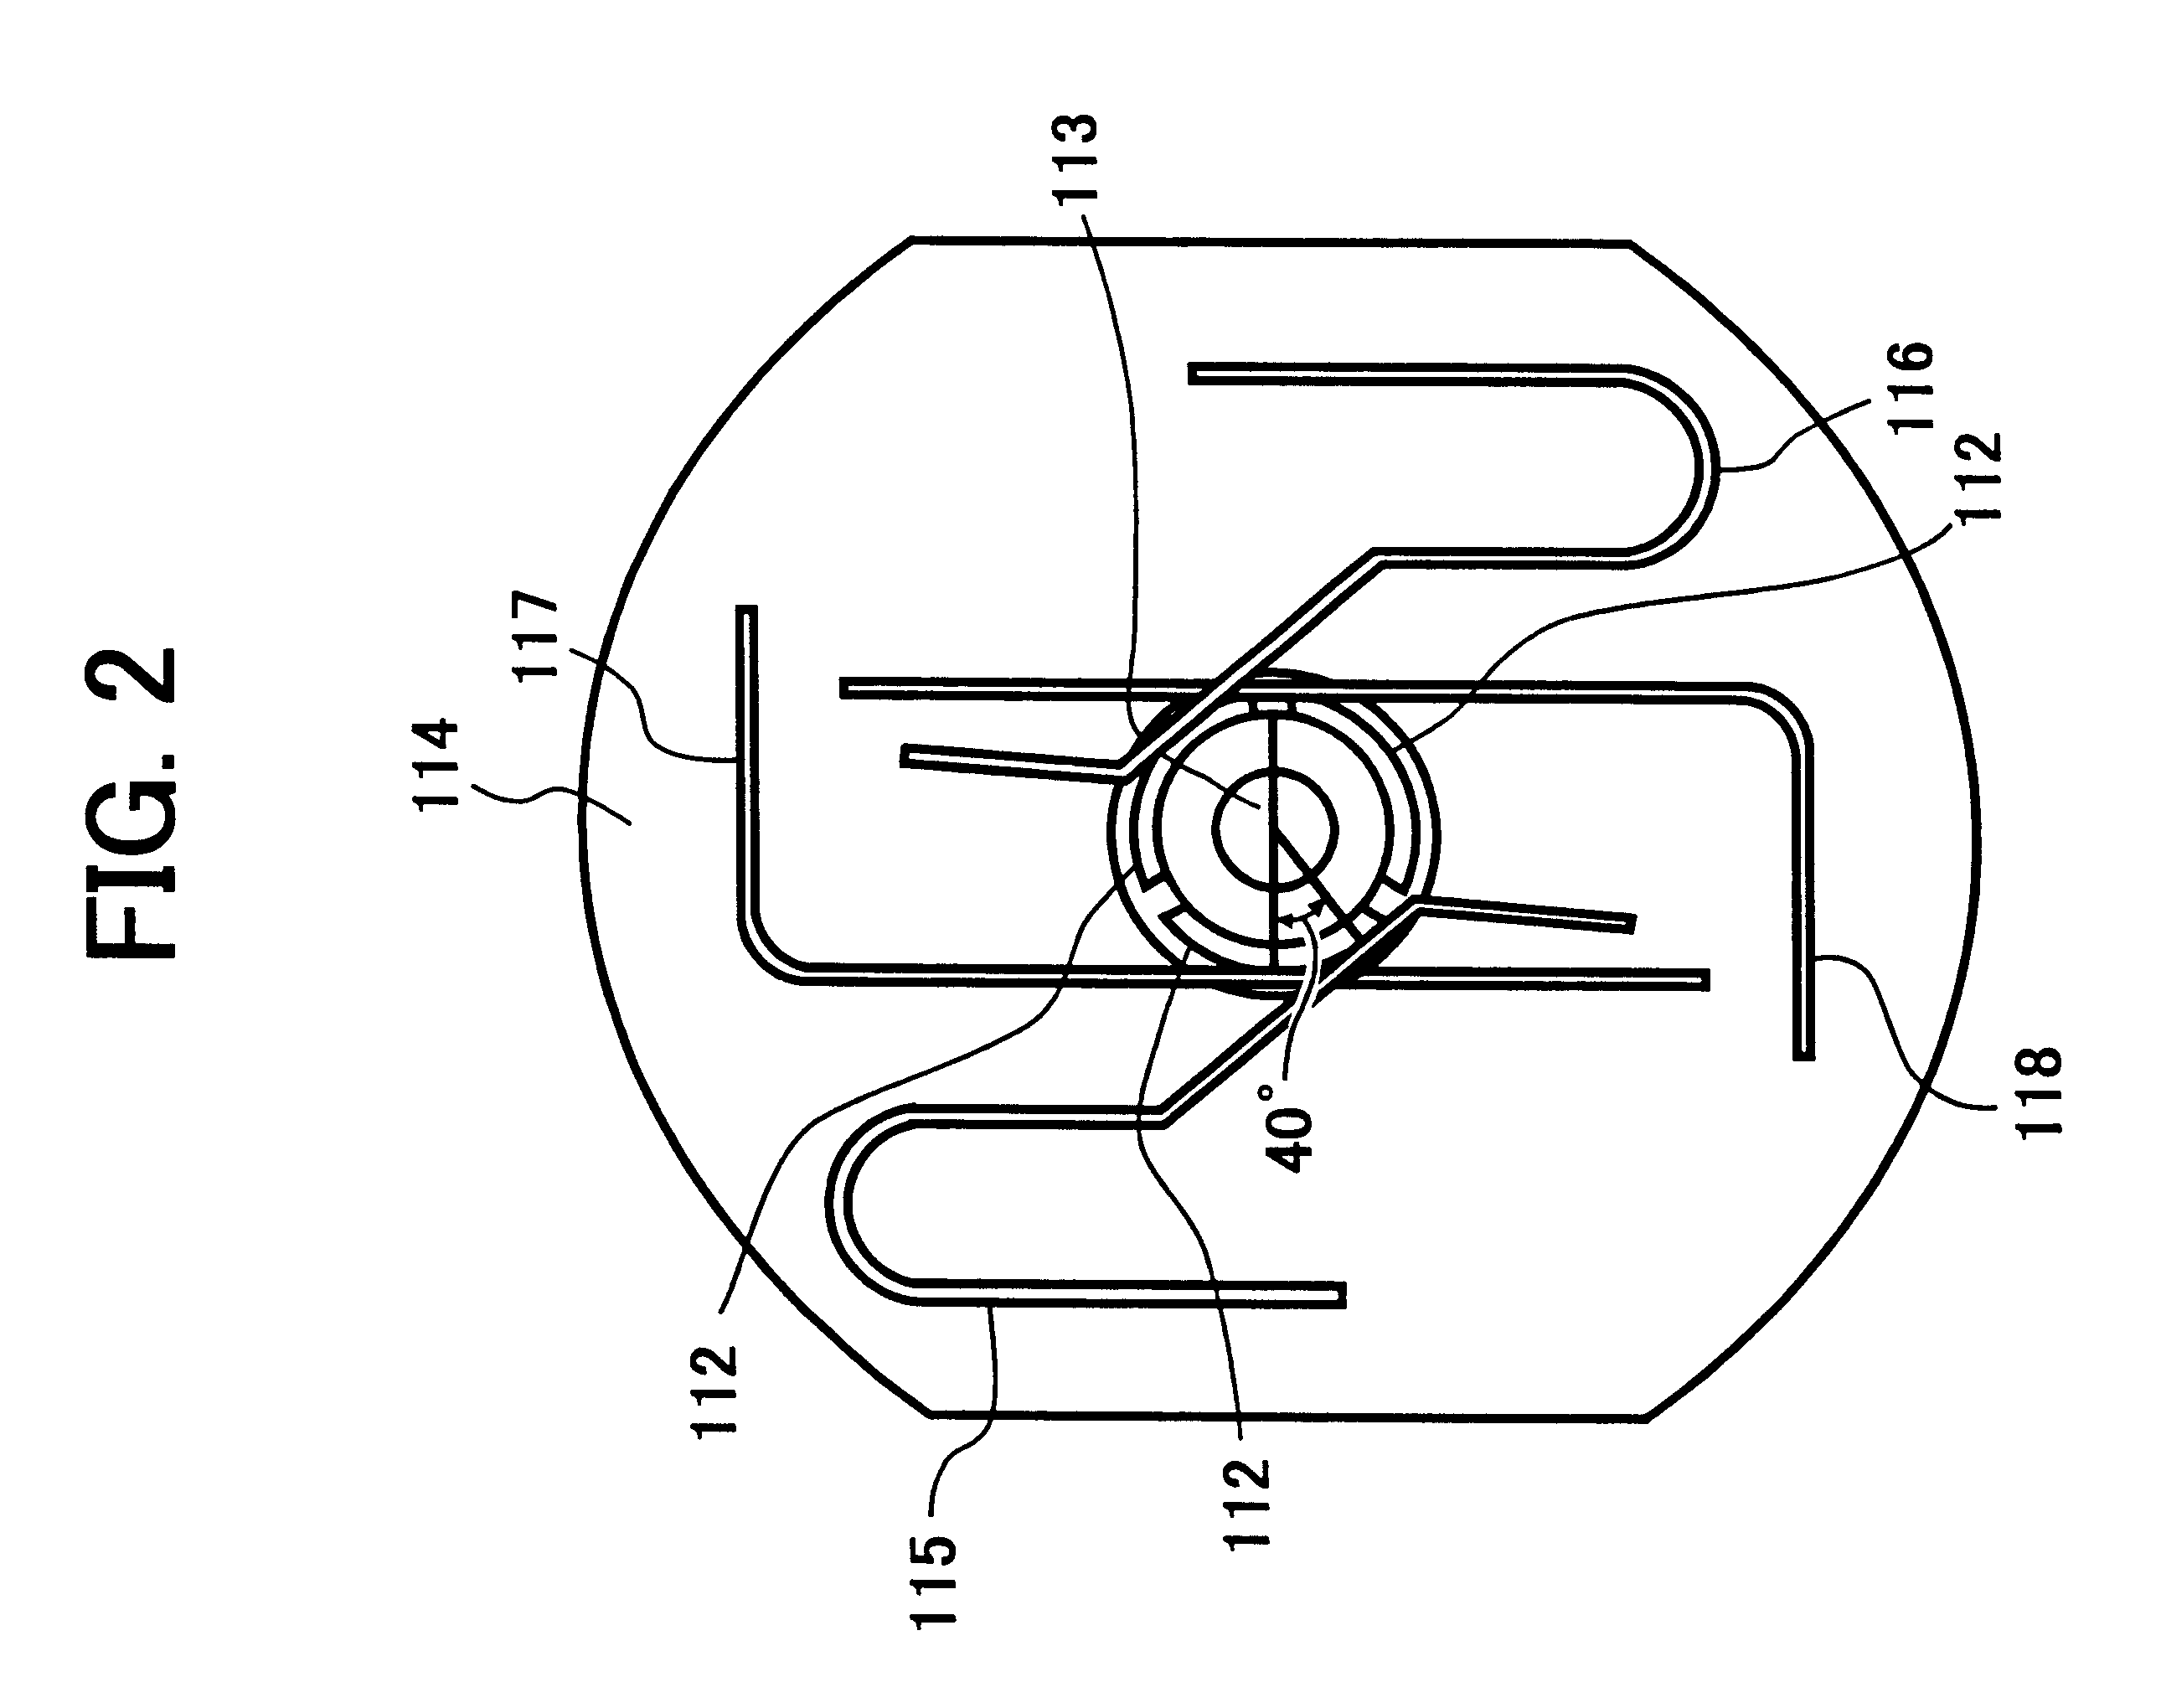 DC motor rotation control apparatus